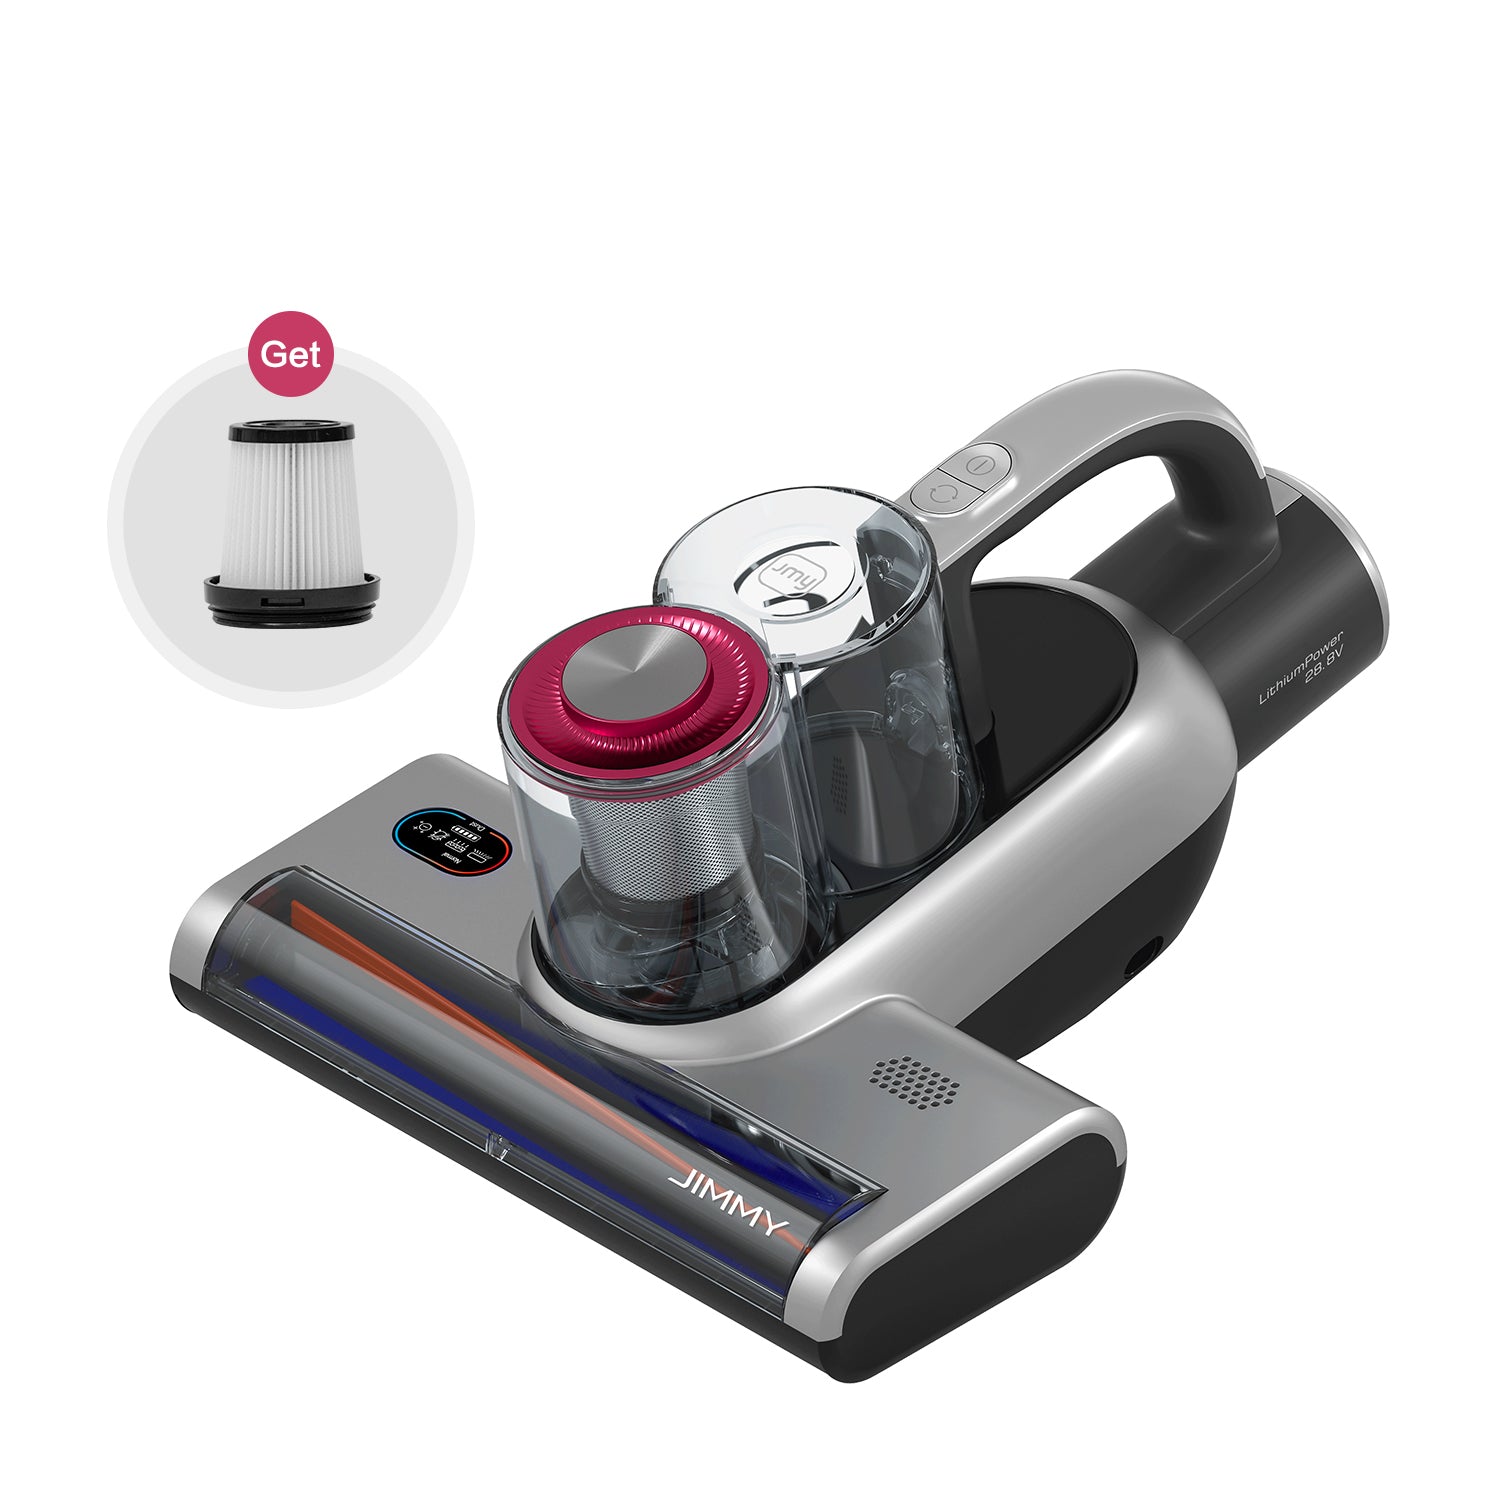 Jimmy BD7 Pro Cordless Anti-Mite Vacuum Cleaner